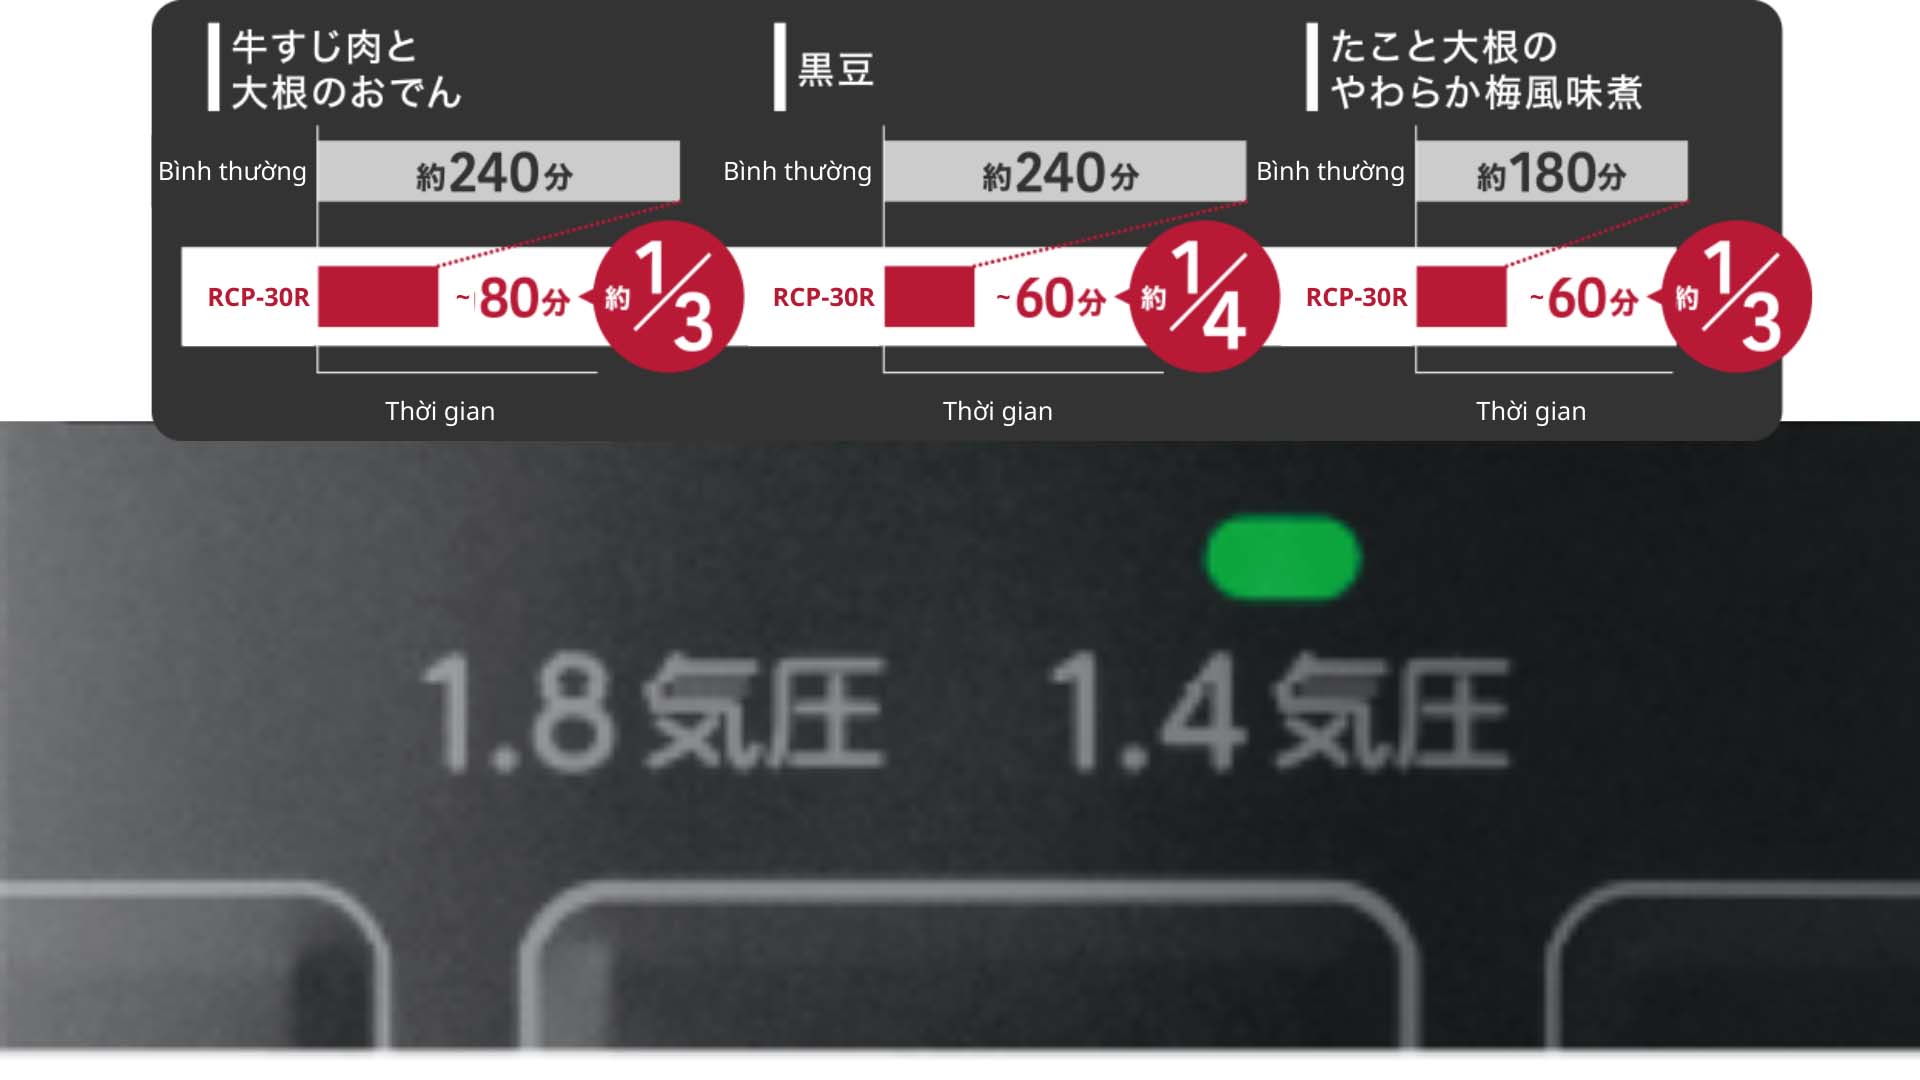 Nồi áp suất điện Toshiba RCP-30R